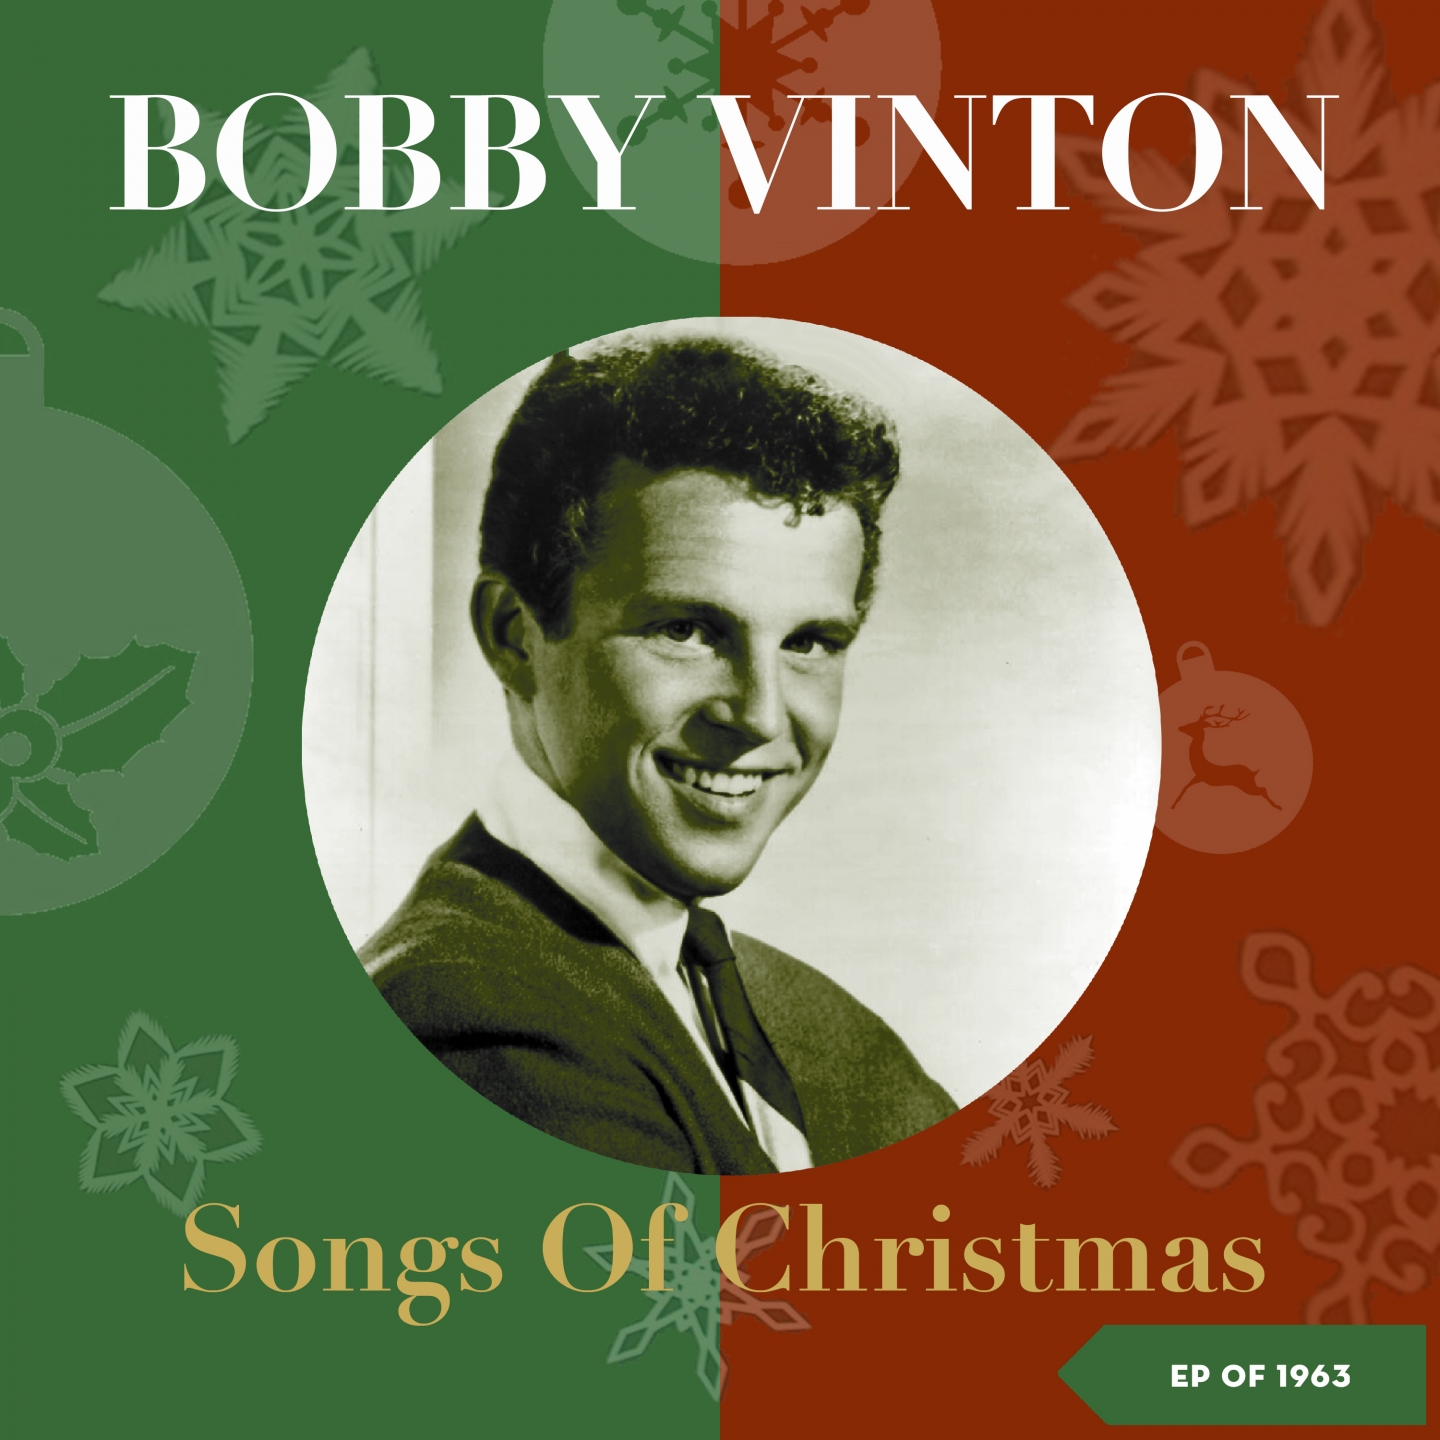 Songs of Christmas (EP of 1963)